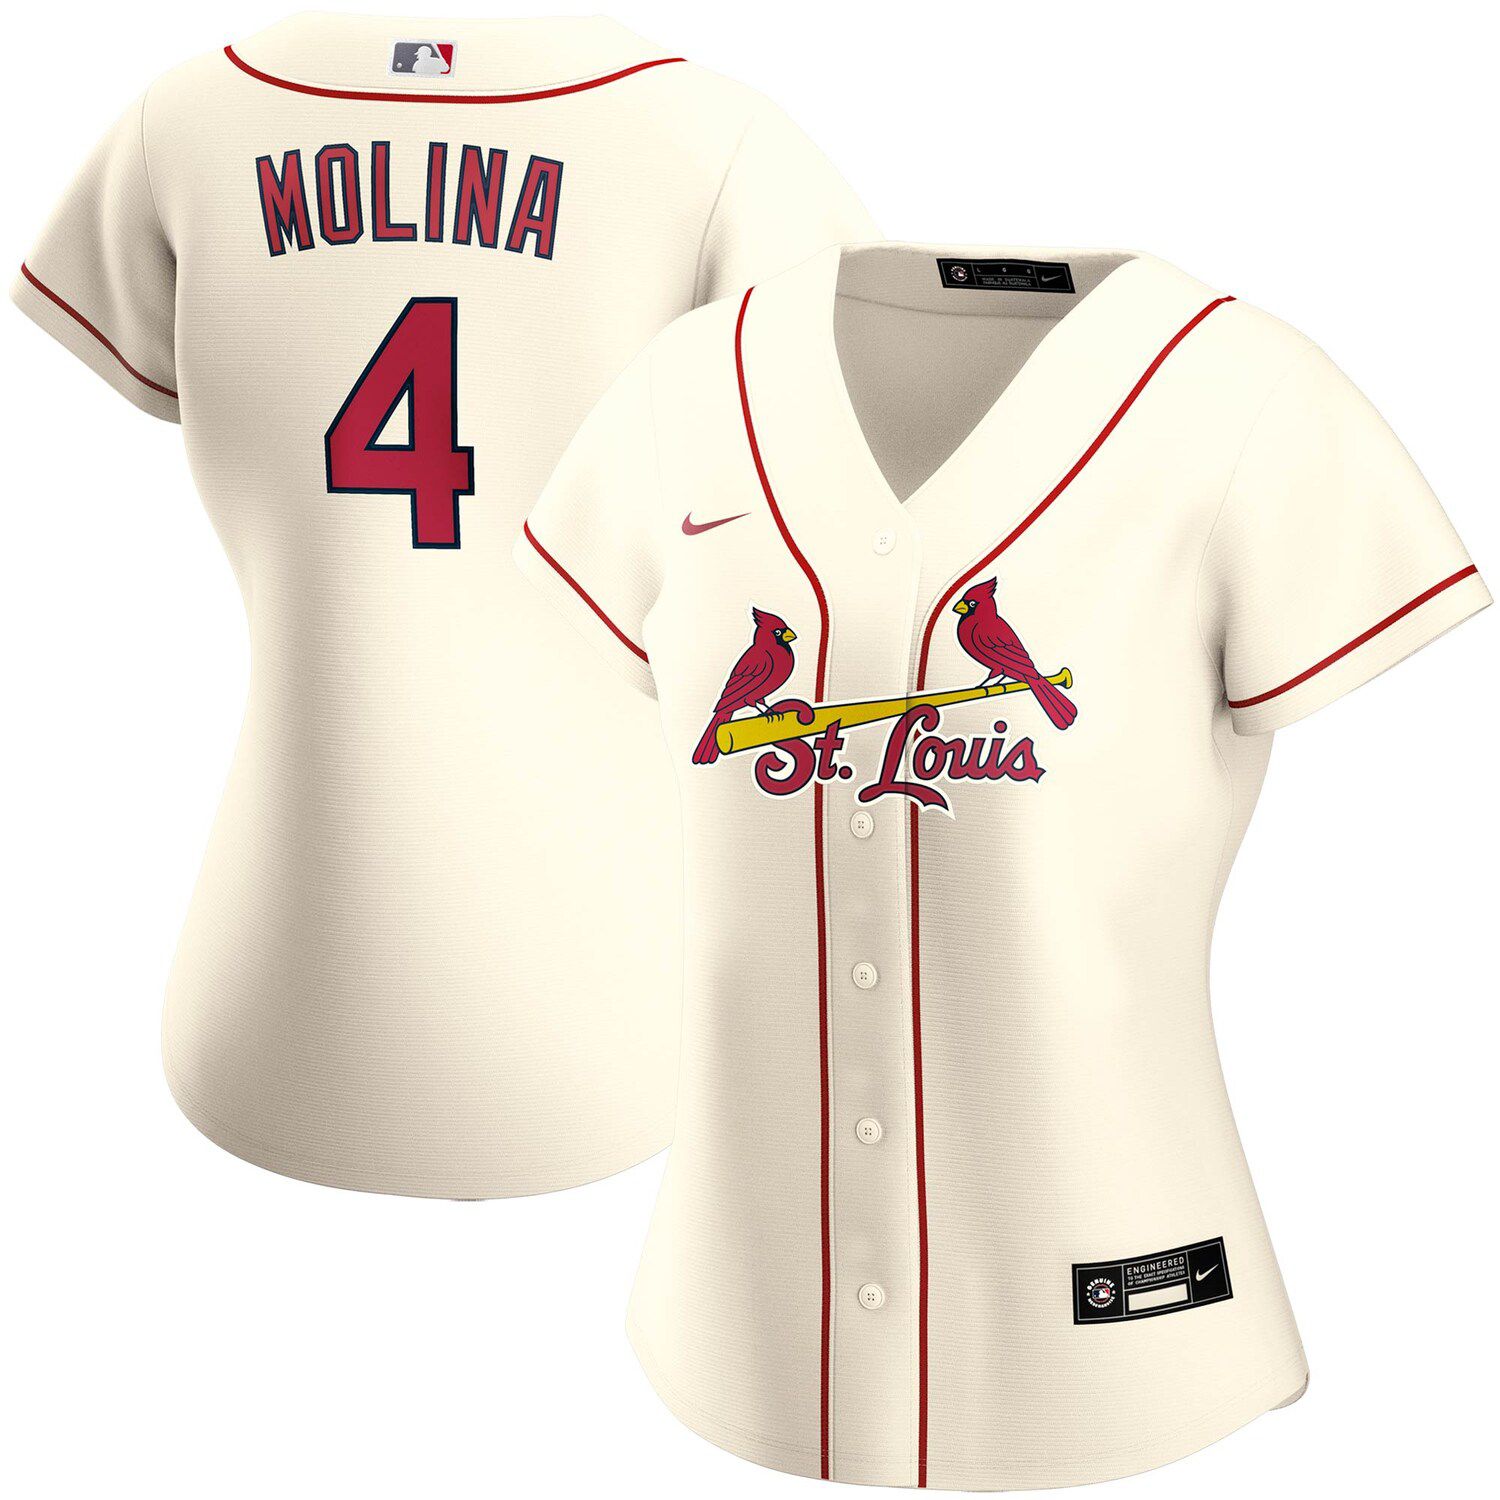 Men's Nike Yadier Molina Light Blue St. Louis Cardinals Alternate 2020 Replica Player Jersey